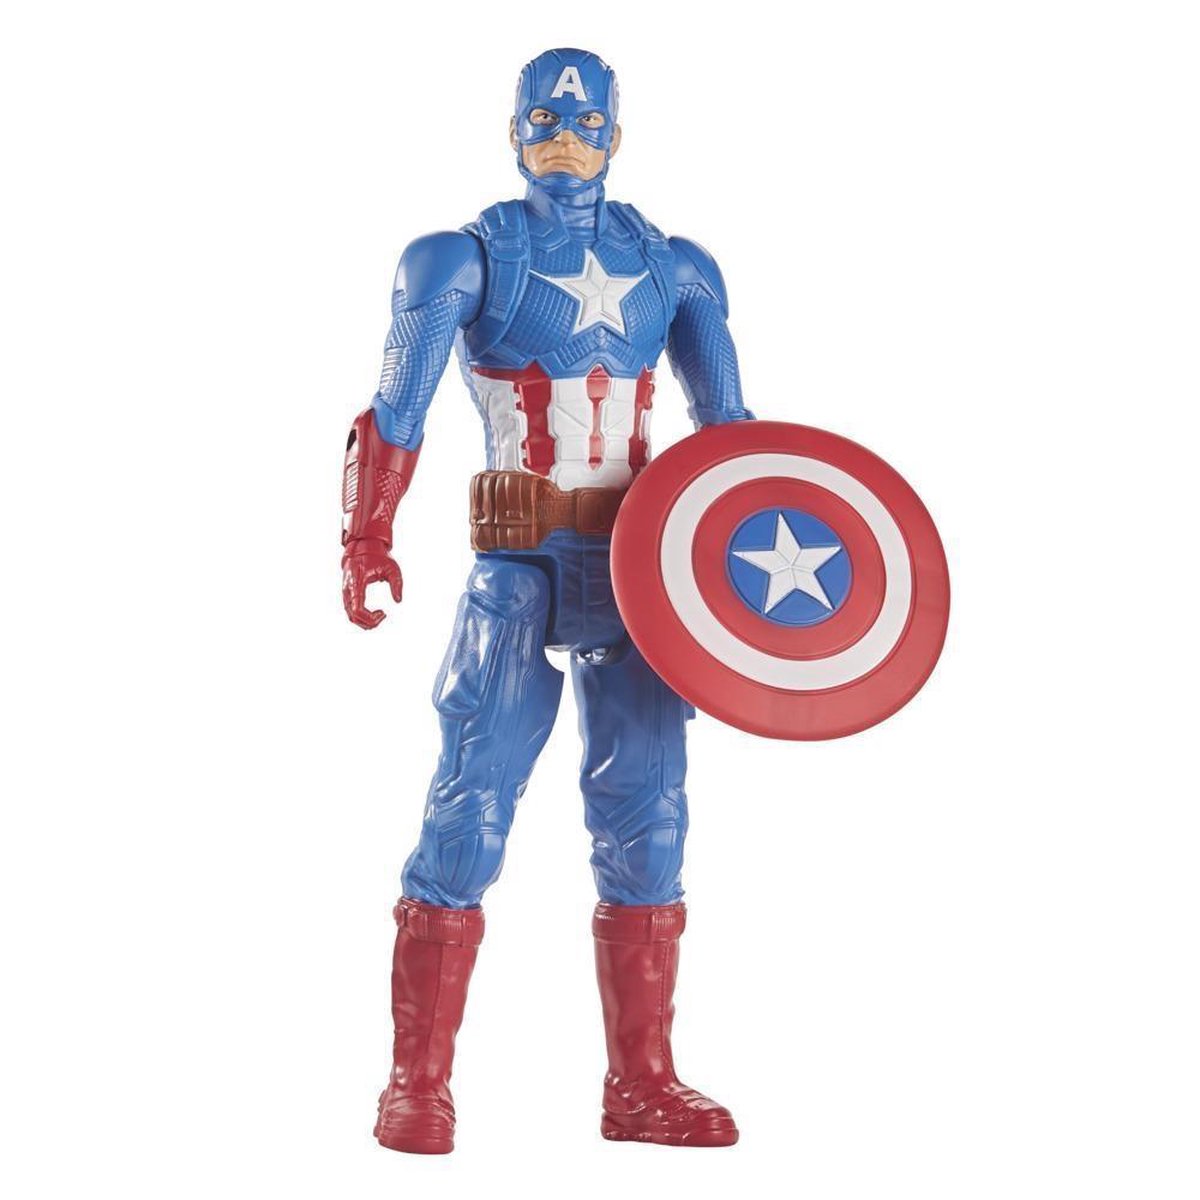 Marvel Avengers Titan Hero - Speelfiguur (30cm) - Captain America - Marvel